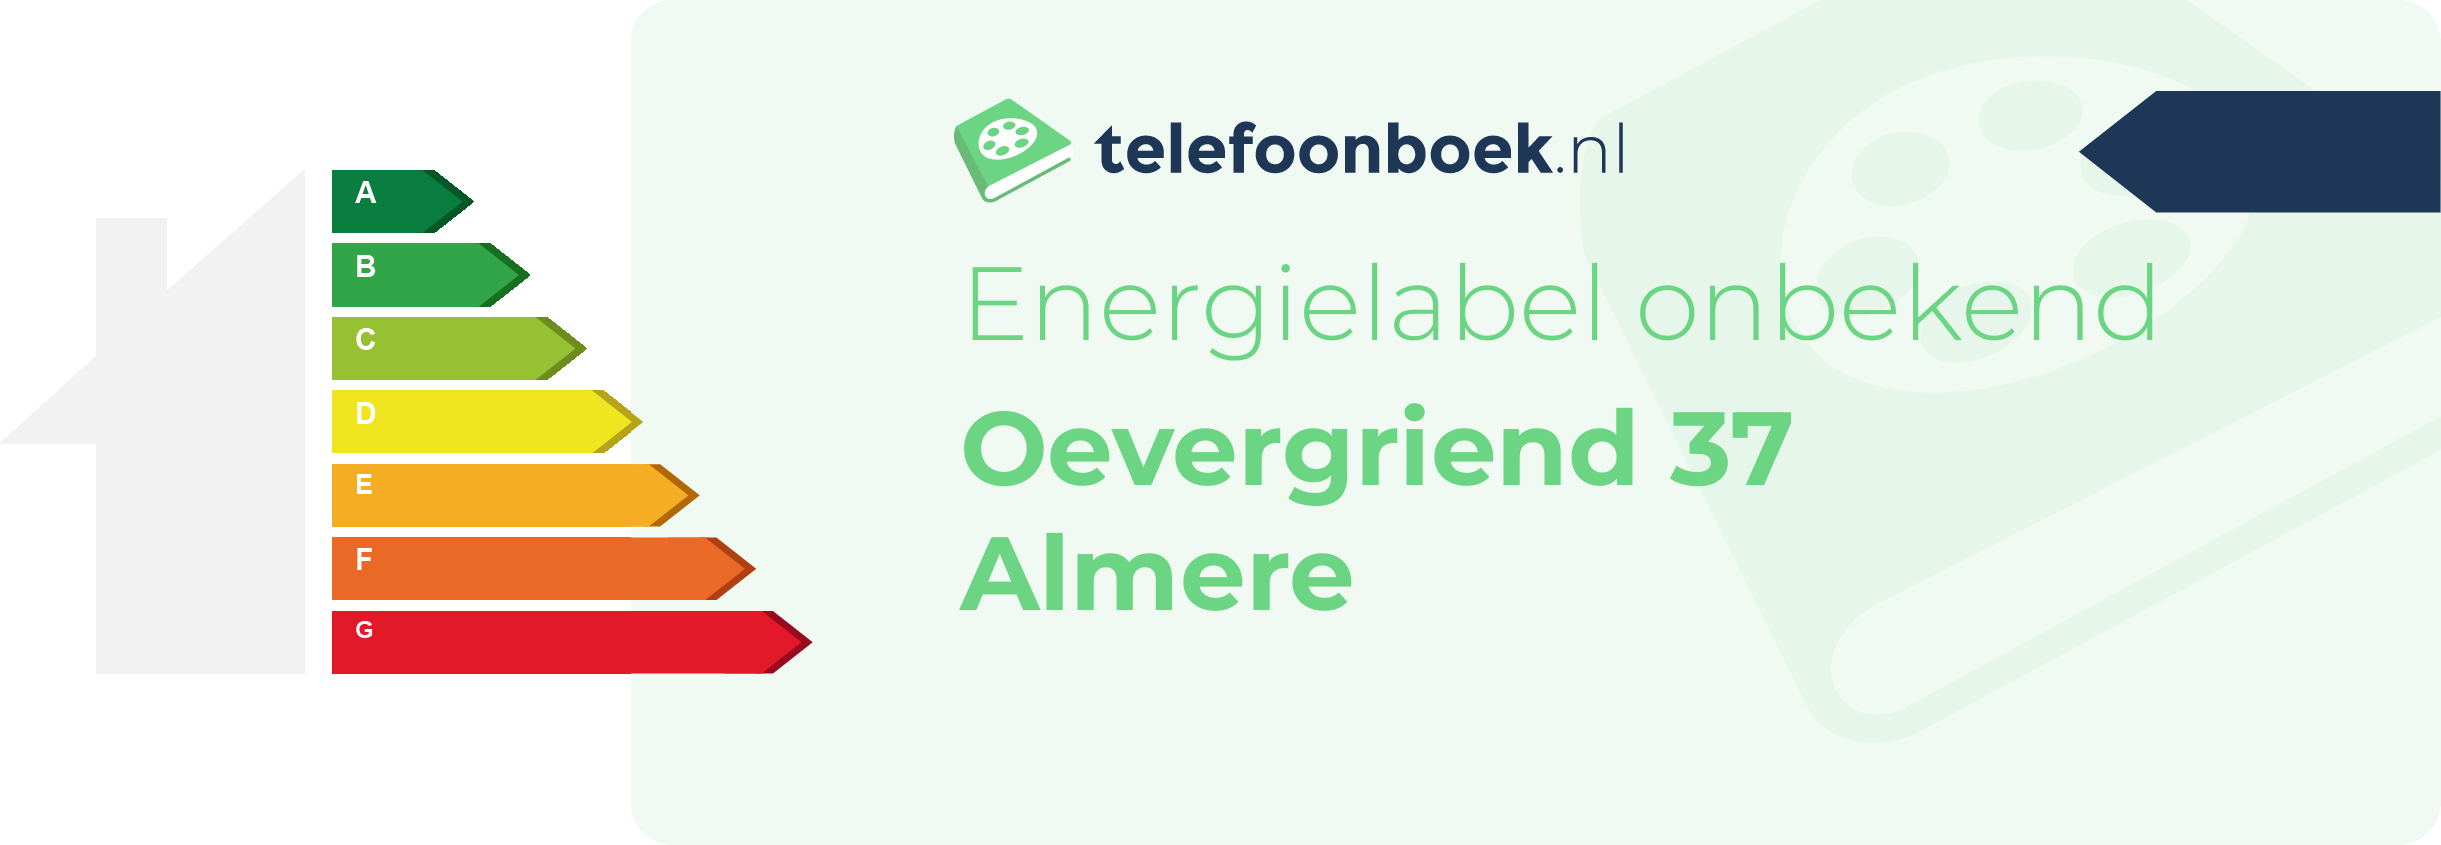 Energielabel Oevergriend 37 Almere